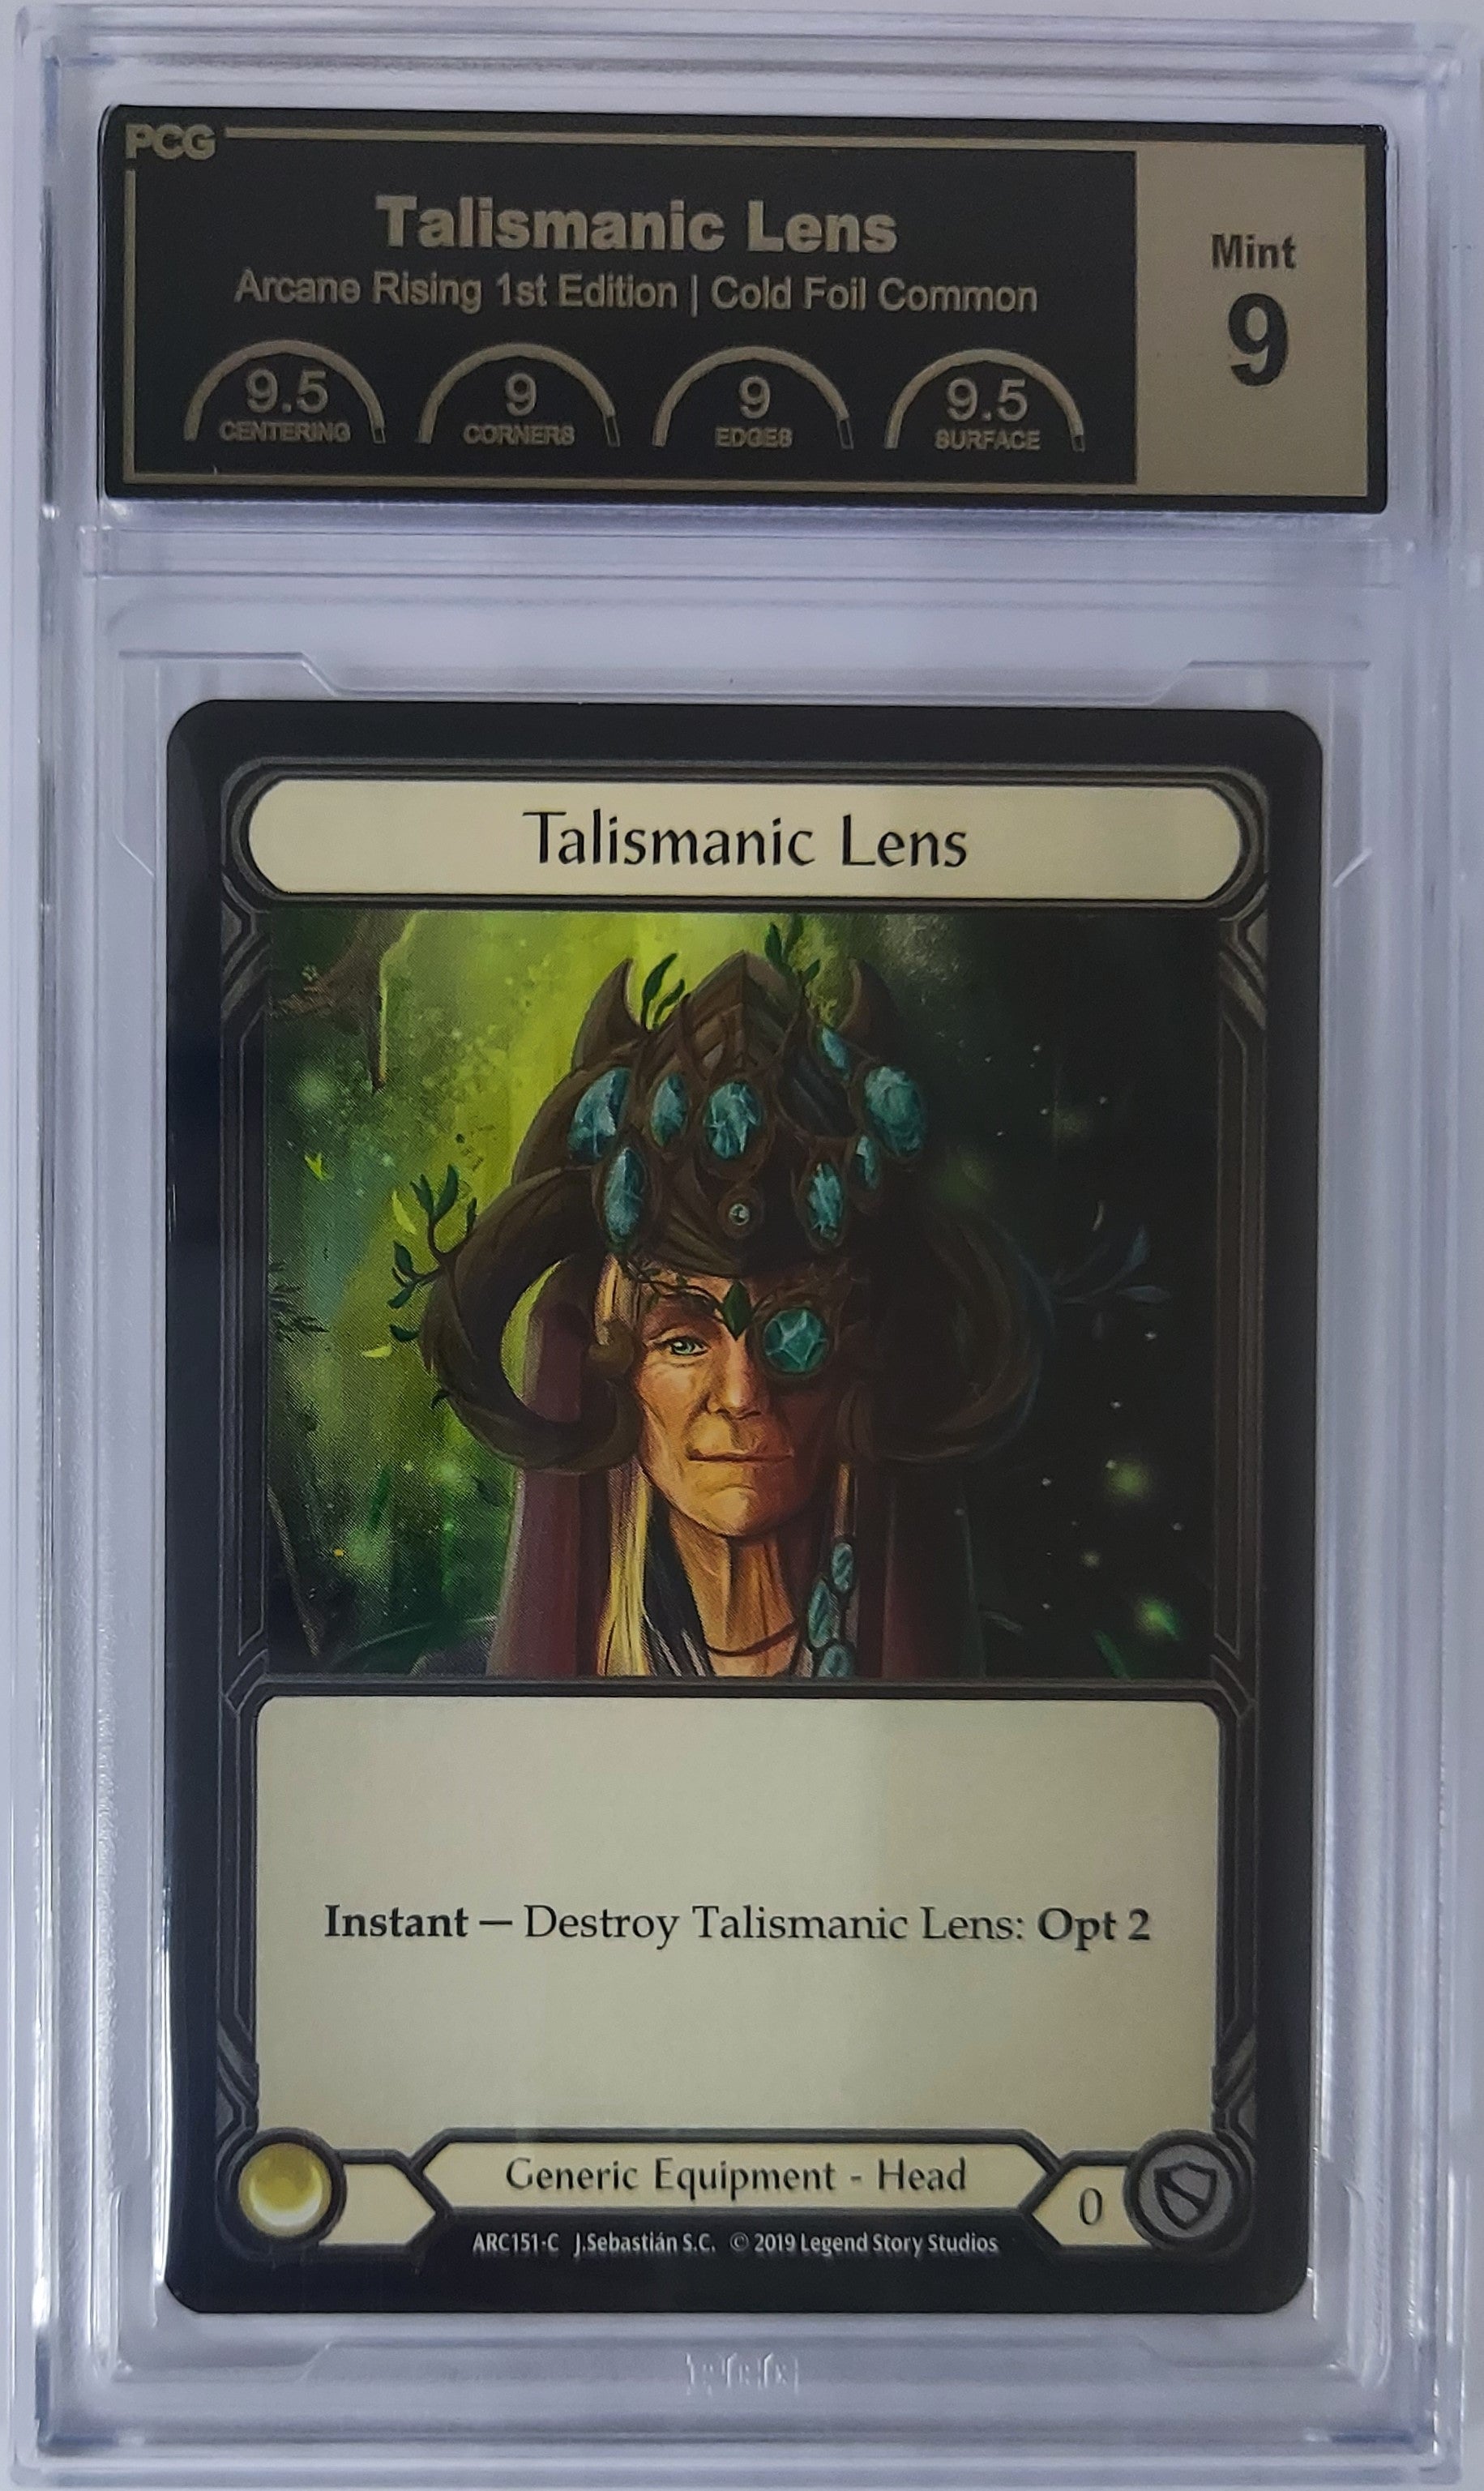 [PCG 9] Talismanic Lens - ARC151-C